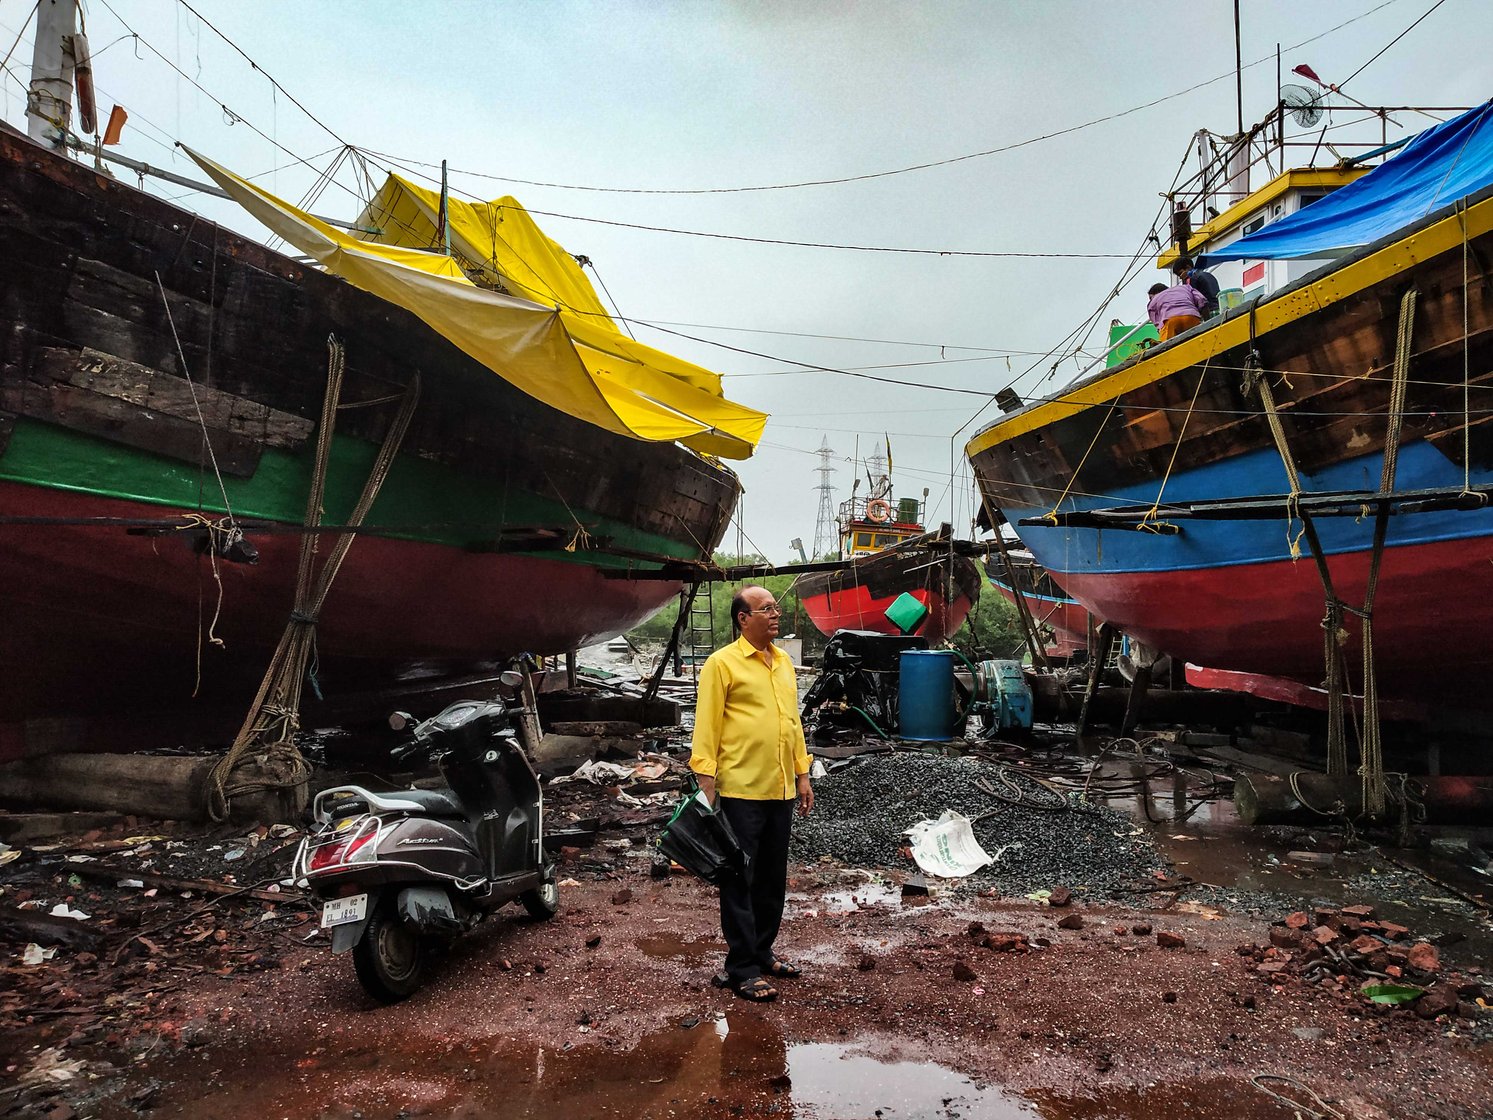 Bhagwan Bhanji in a yard where trawlers are repaired, at the southern end of Versova Koliwada 